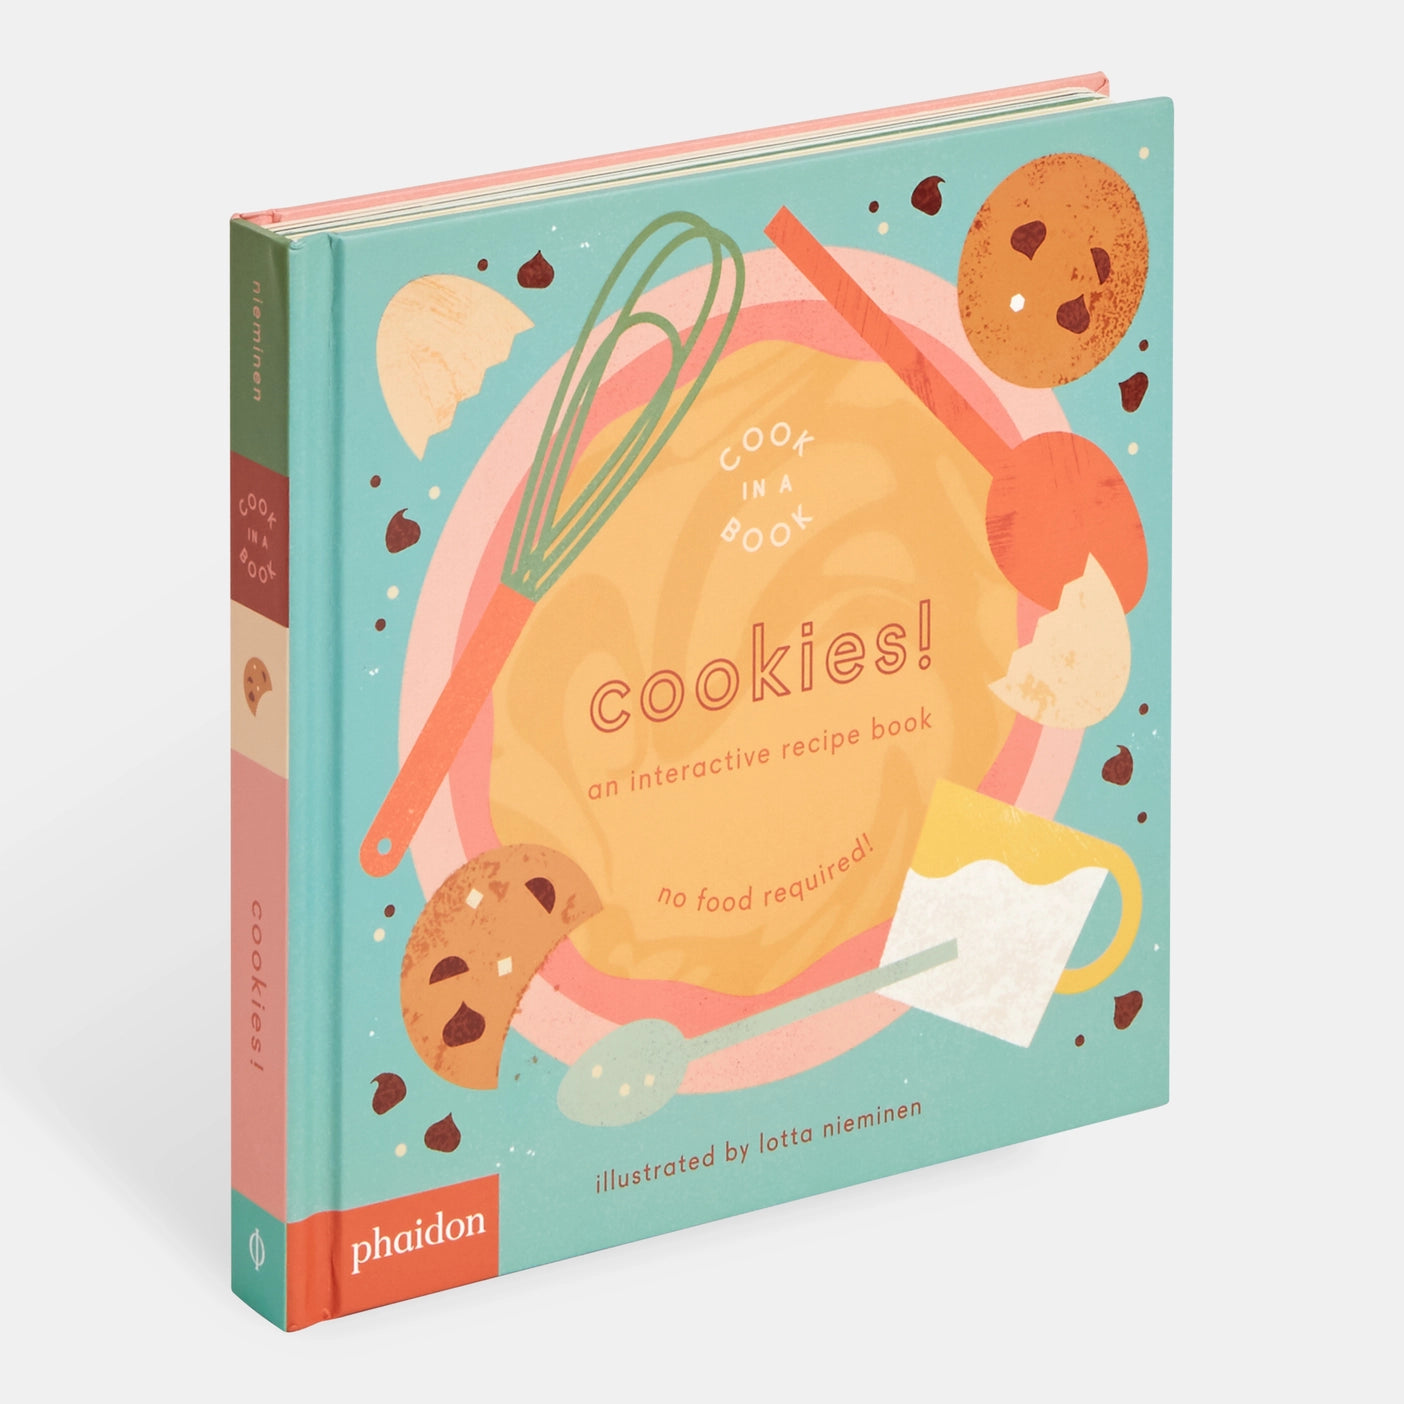 Cookies!: An Interactive Recipe Book (Cook In A Book)